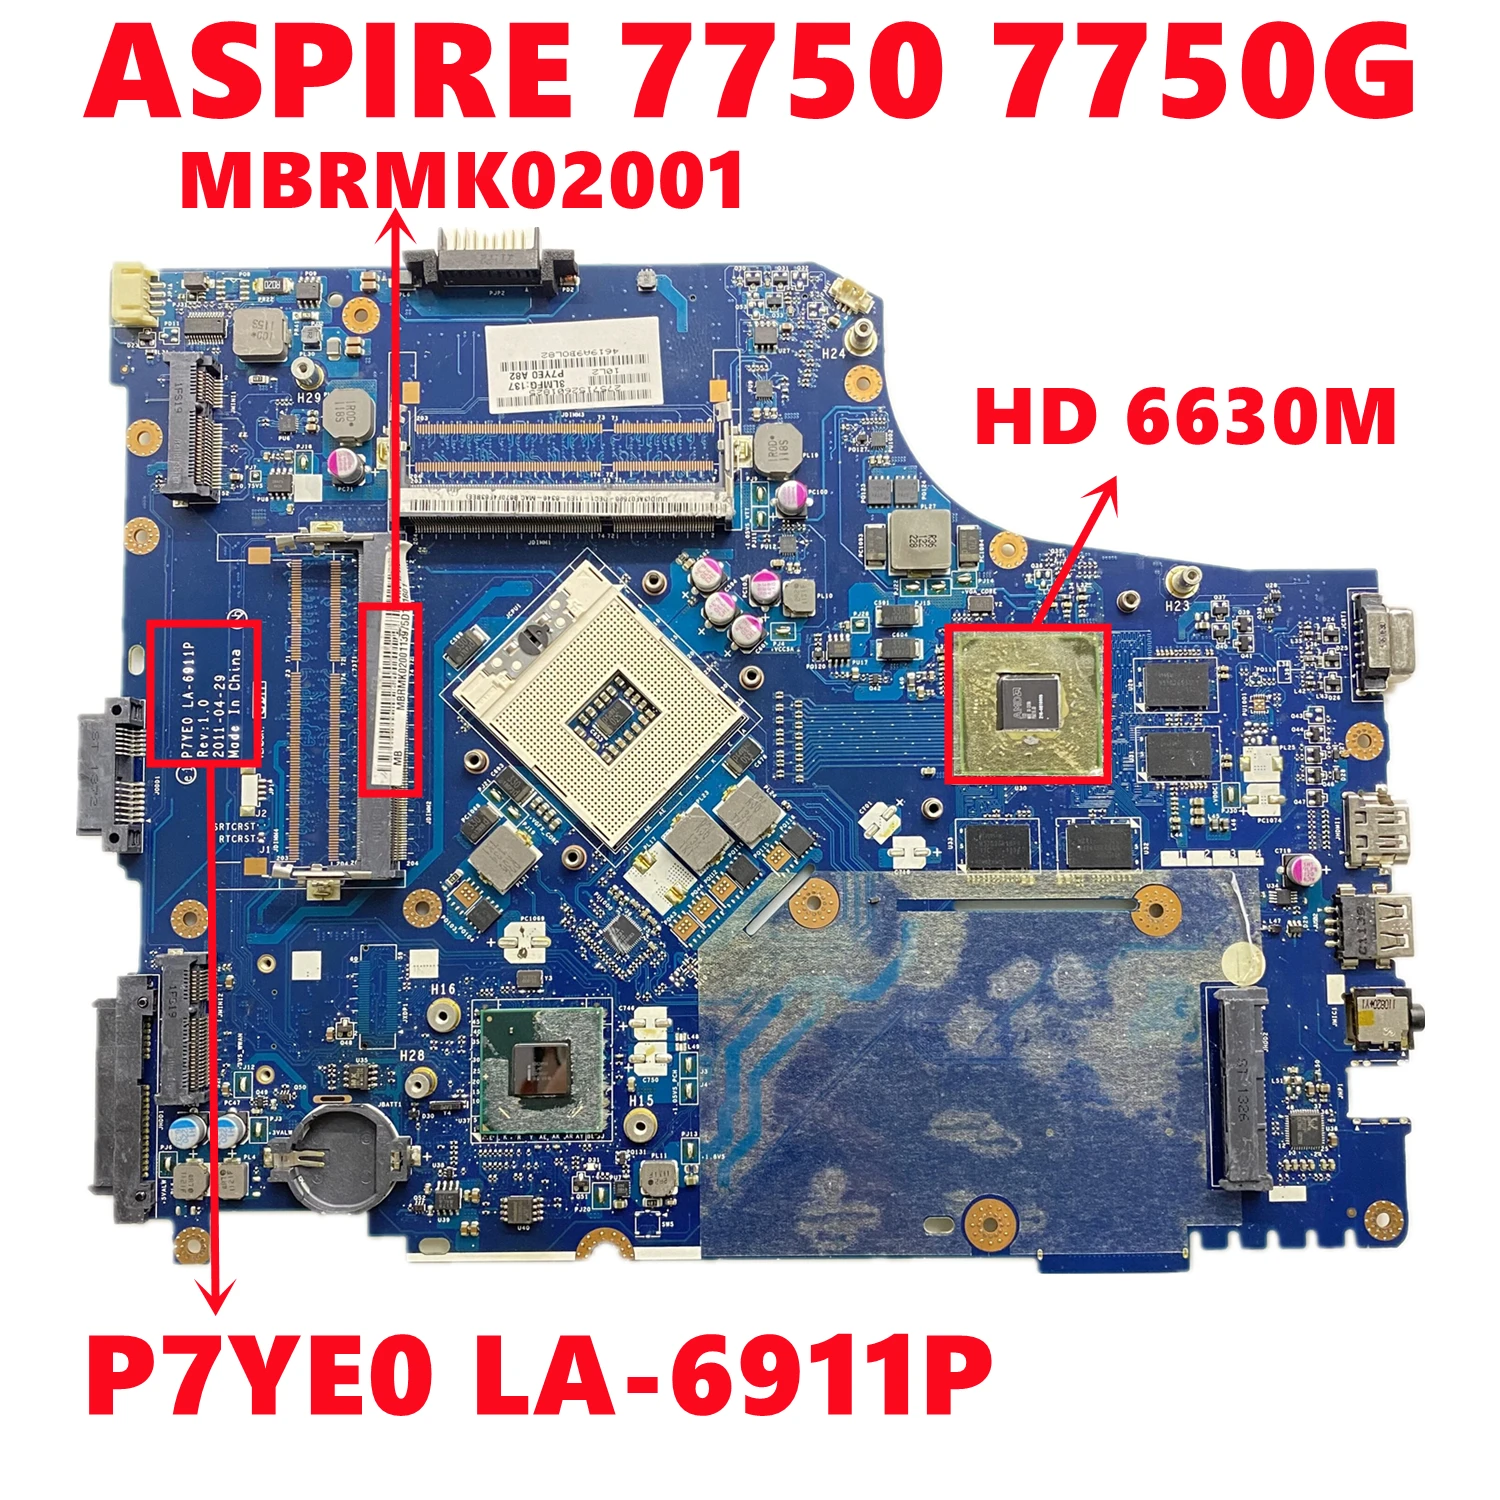 Материнская плата MBRMK02001 MB.RMK02.001 для ноутбука Acer ASPIRE 7750 7750G системная P7YE0 с 216-0810005 DDR3